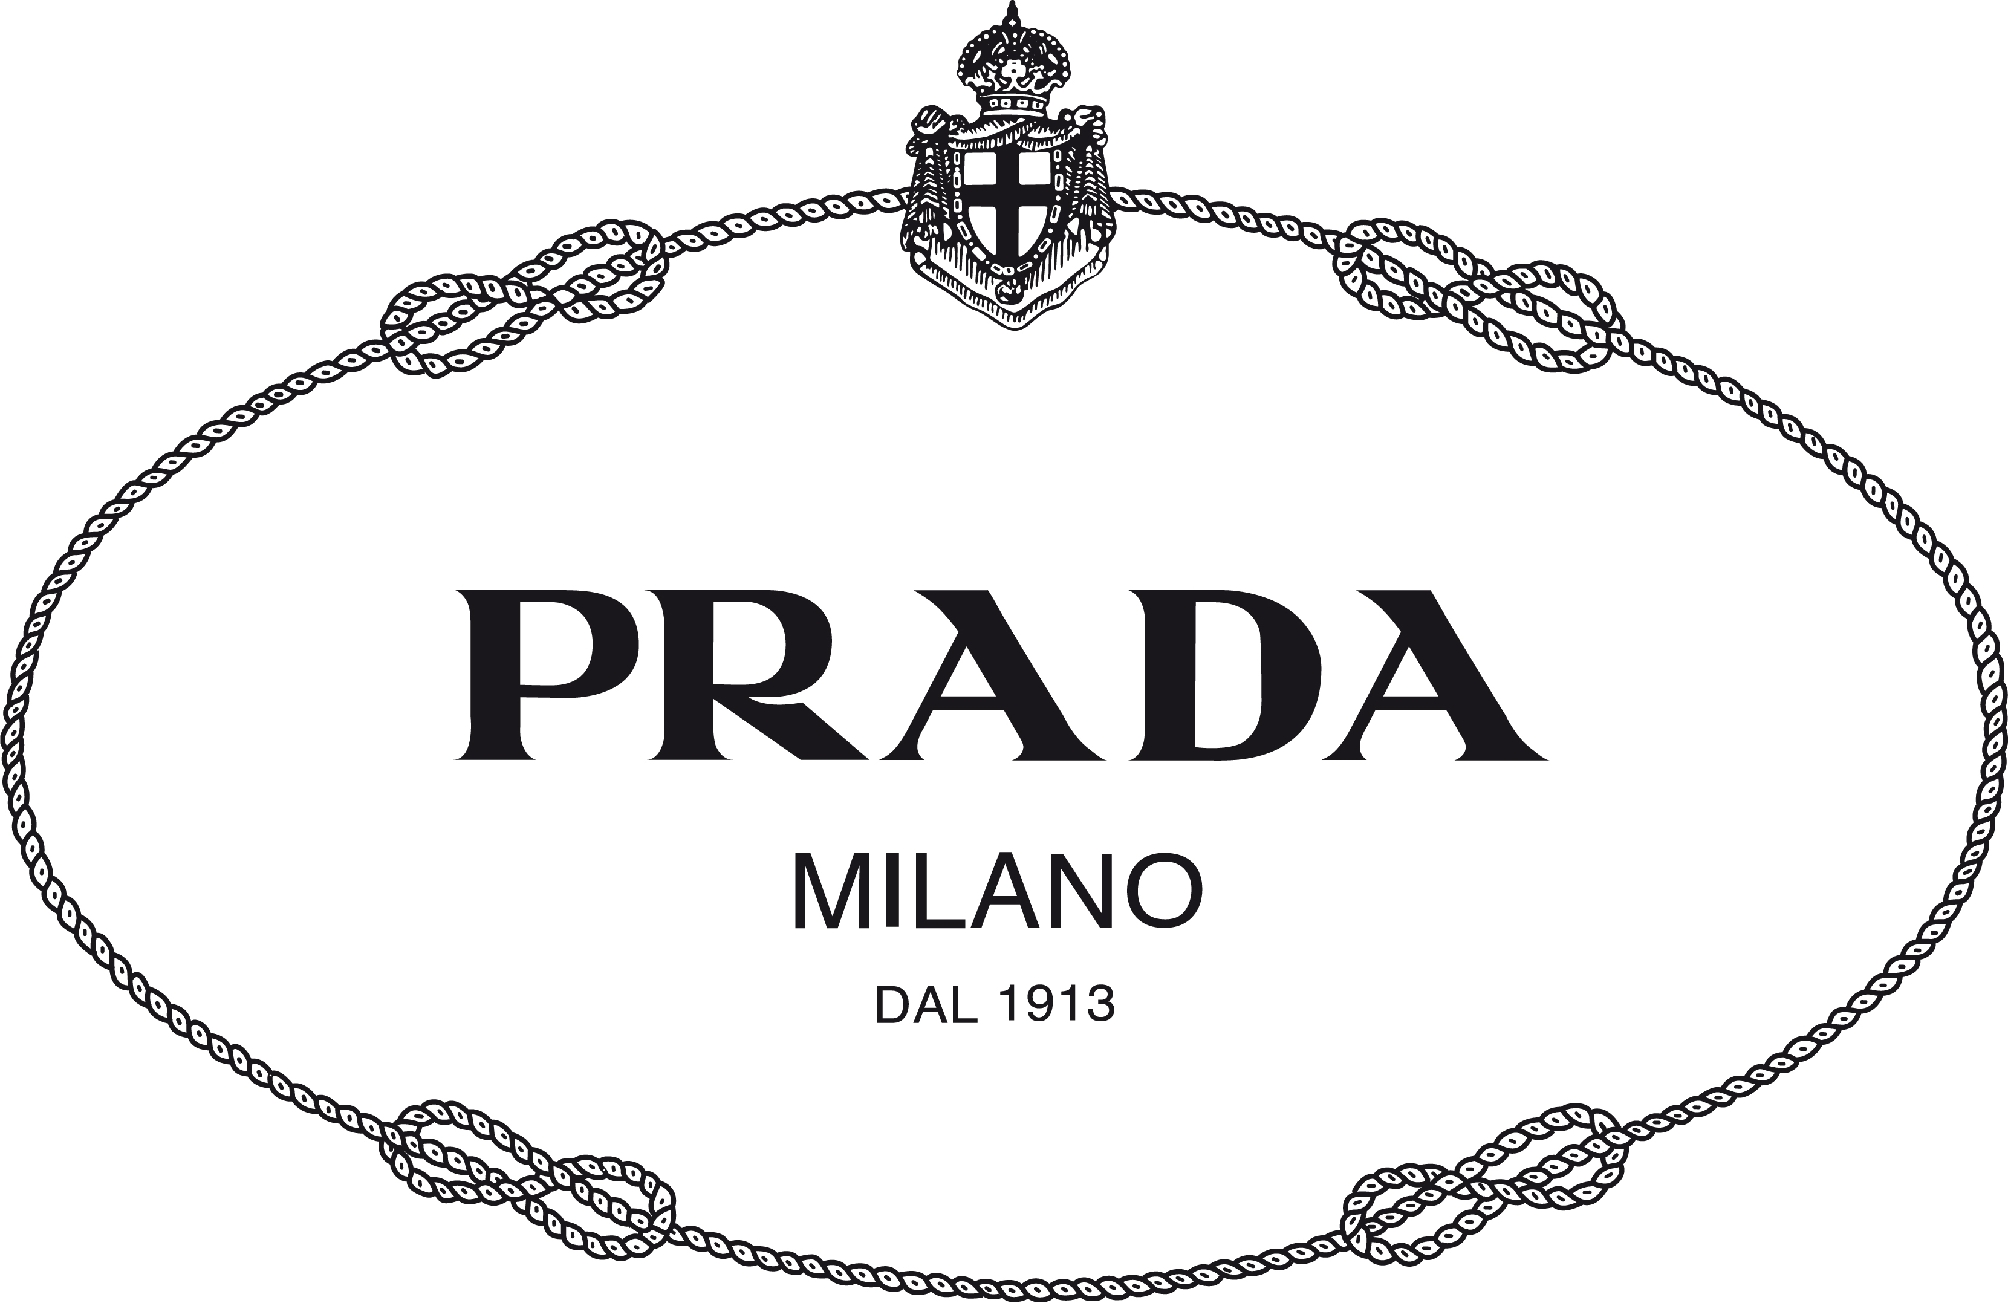 prada-milano-logopin-prada-milano-dal-1913-logo-on-pinterest-fwfcefon